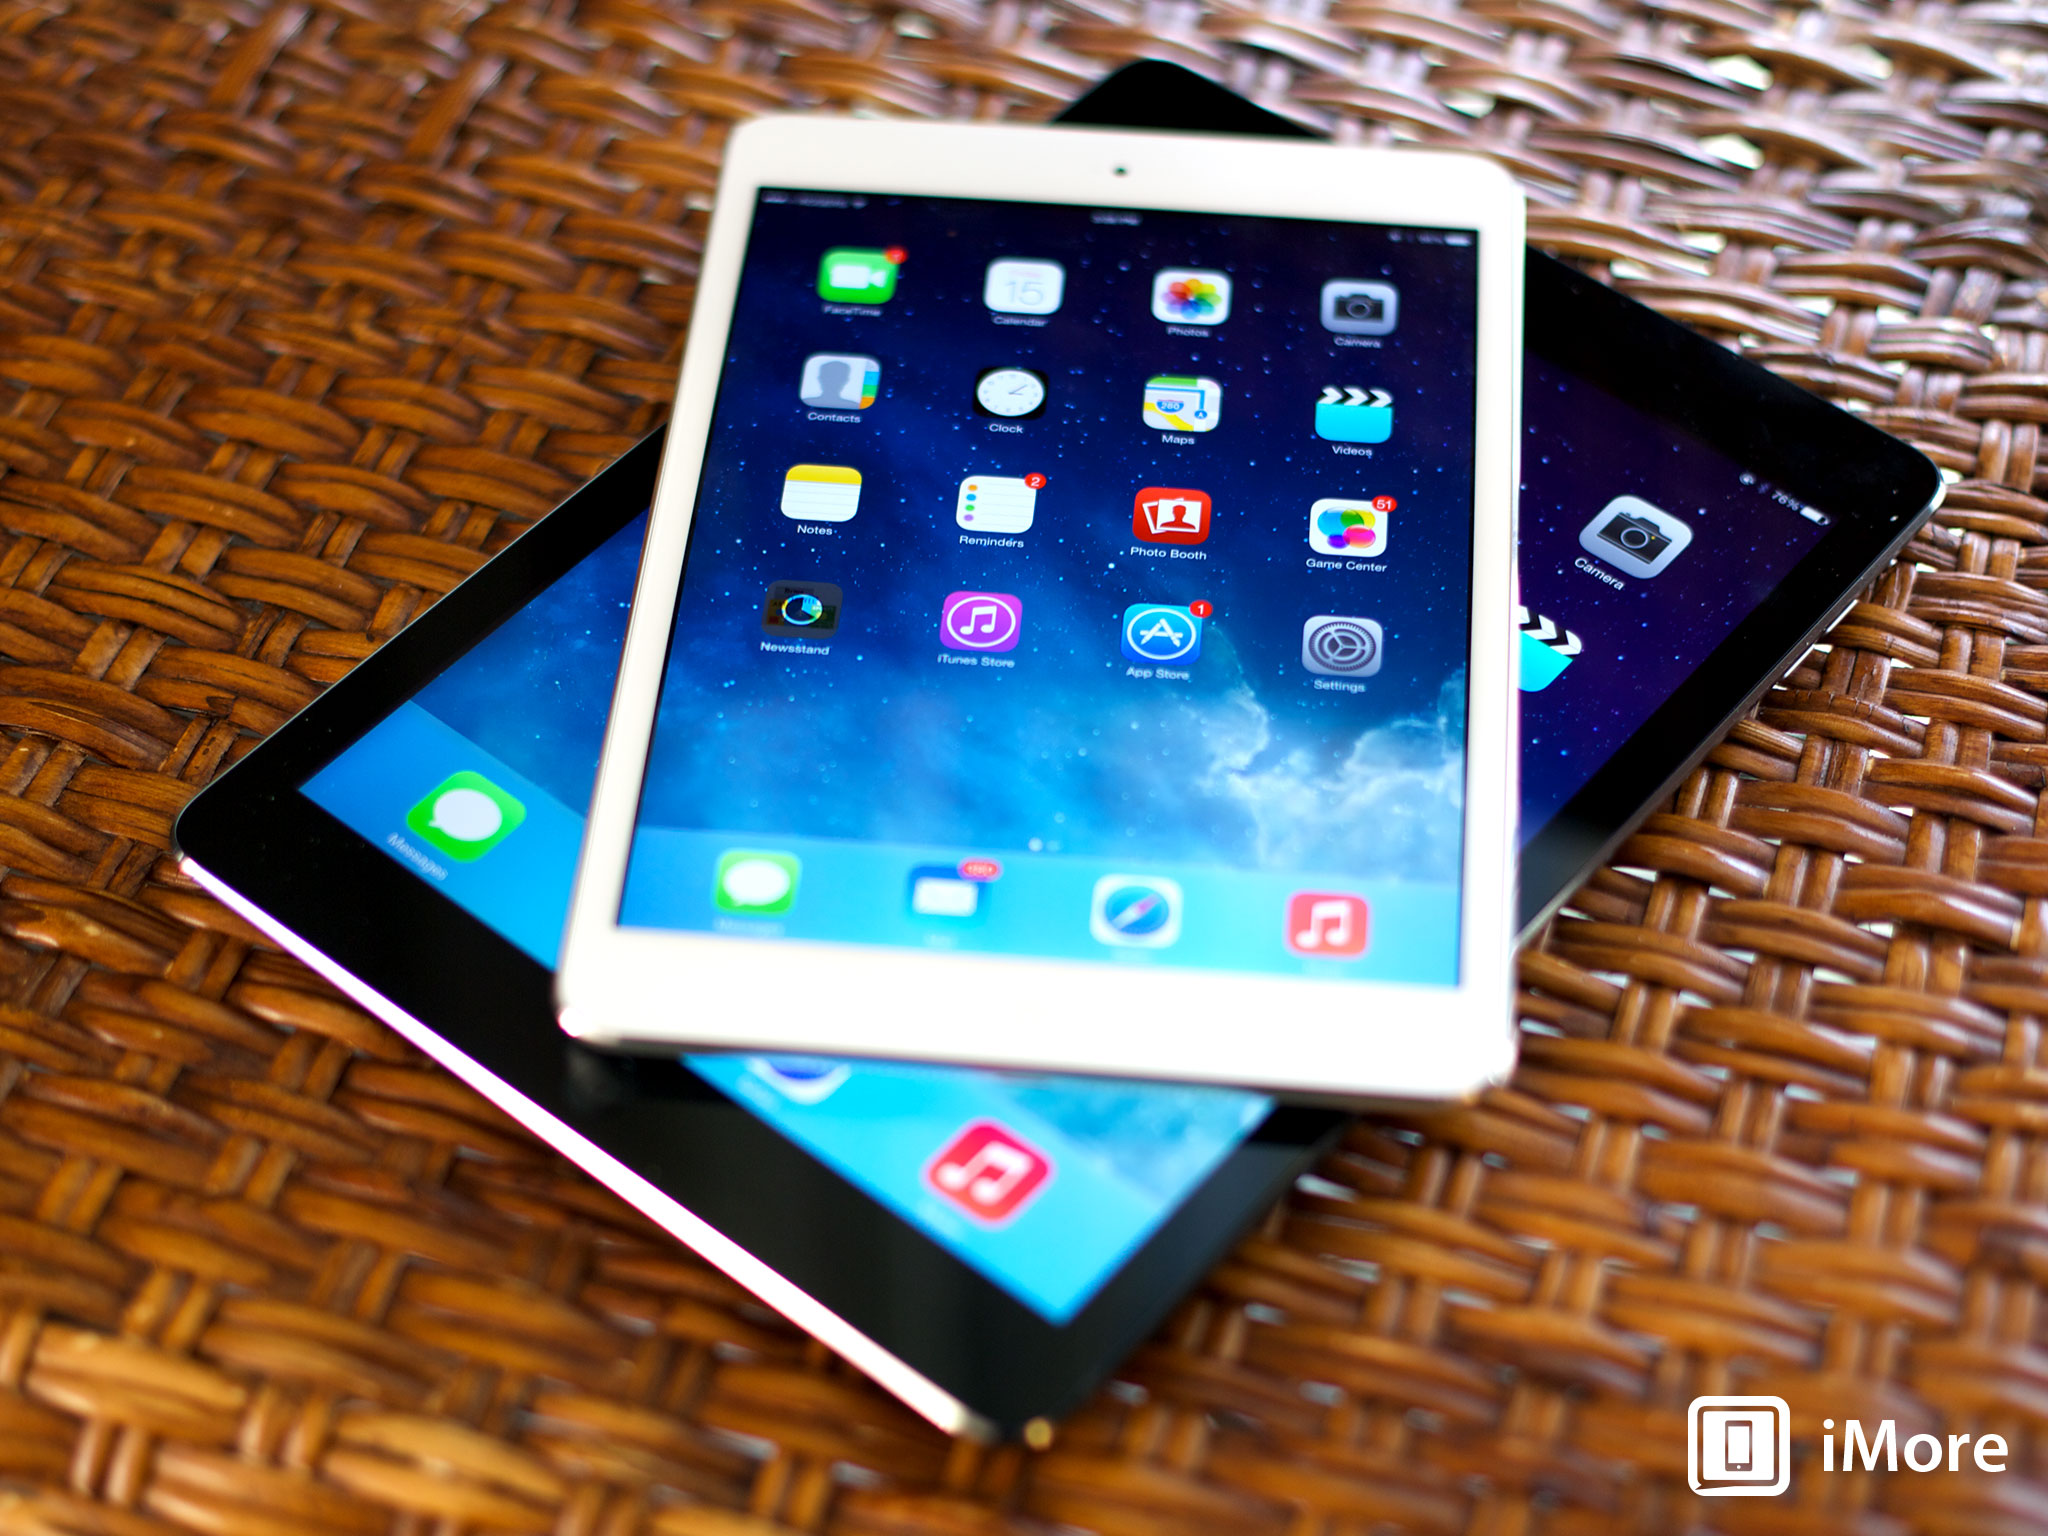 iPad mini 2 display: High density, narrow color-gamut, possible image retention